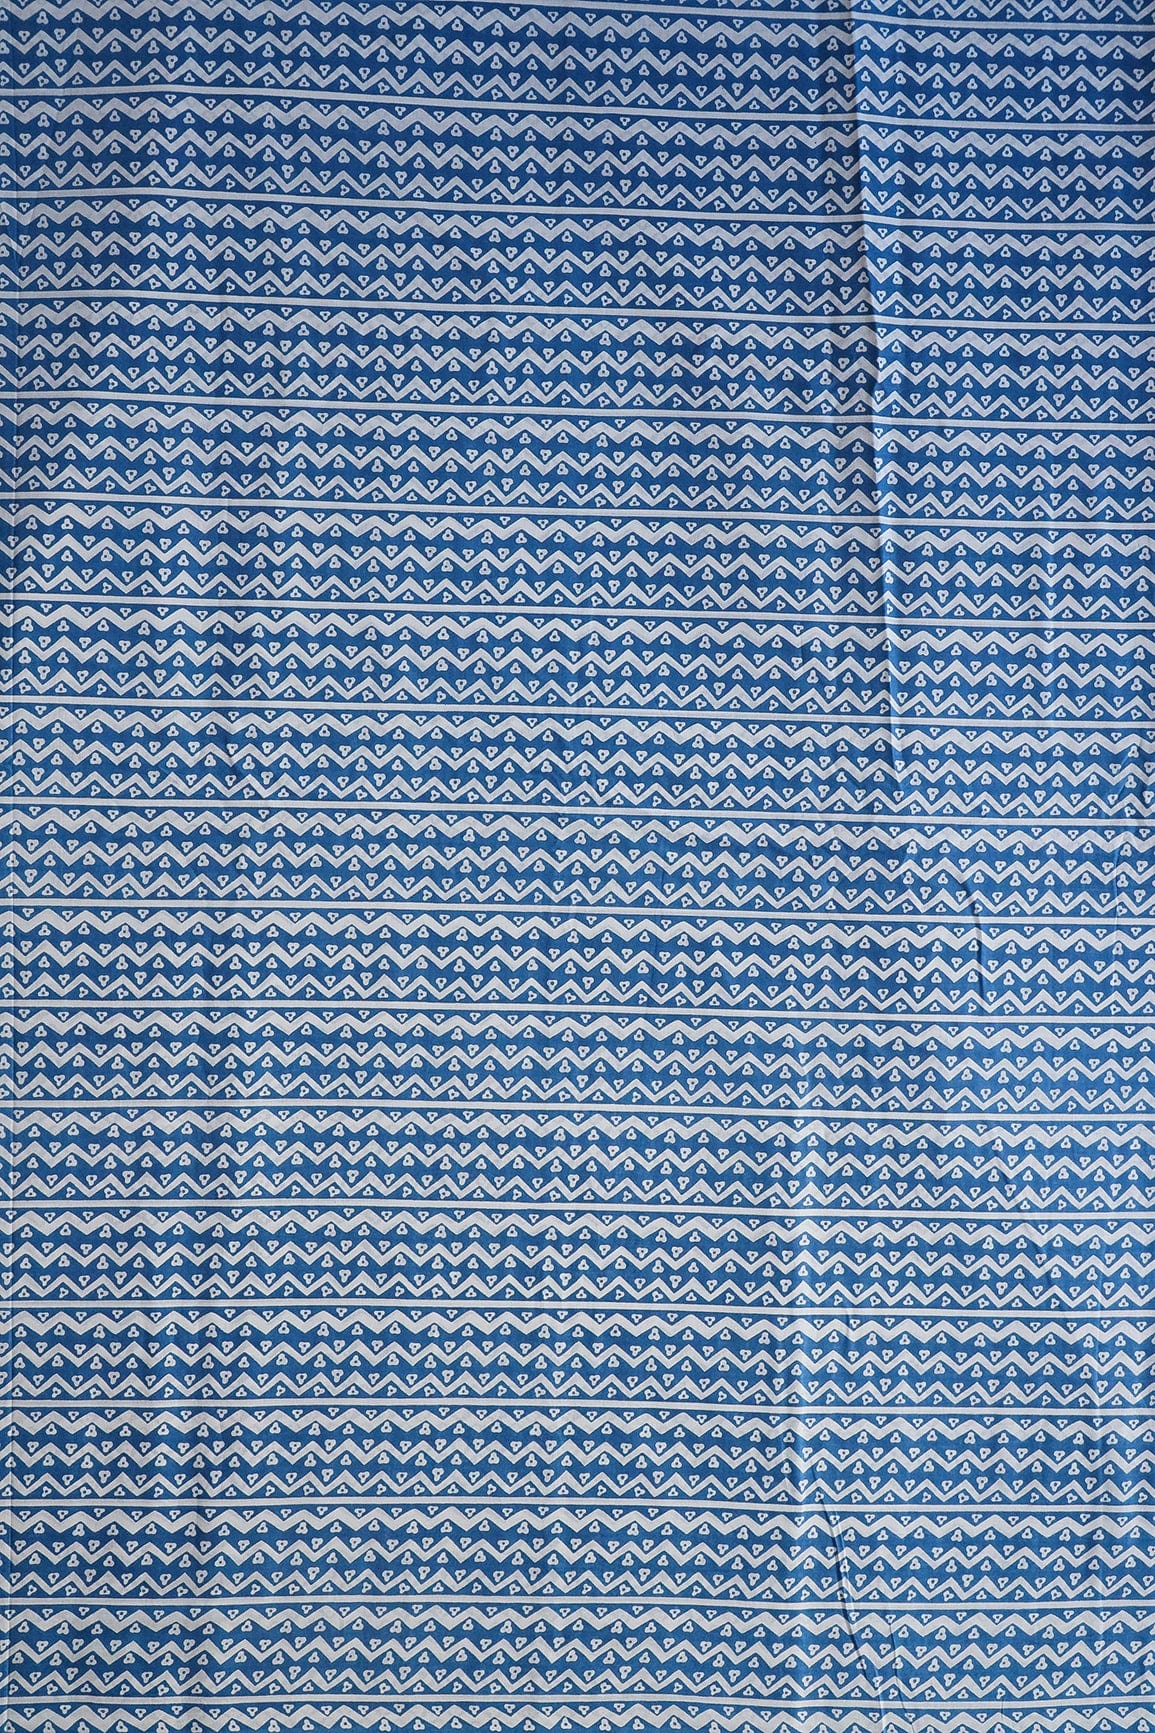 doeraa Prints Cobalt Blue And White Chevron Pattern Print On Pure Cotton Fabric